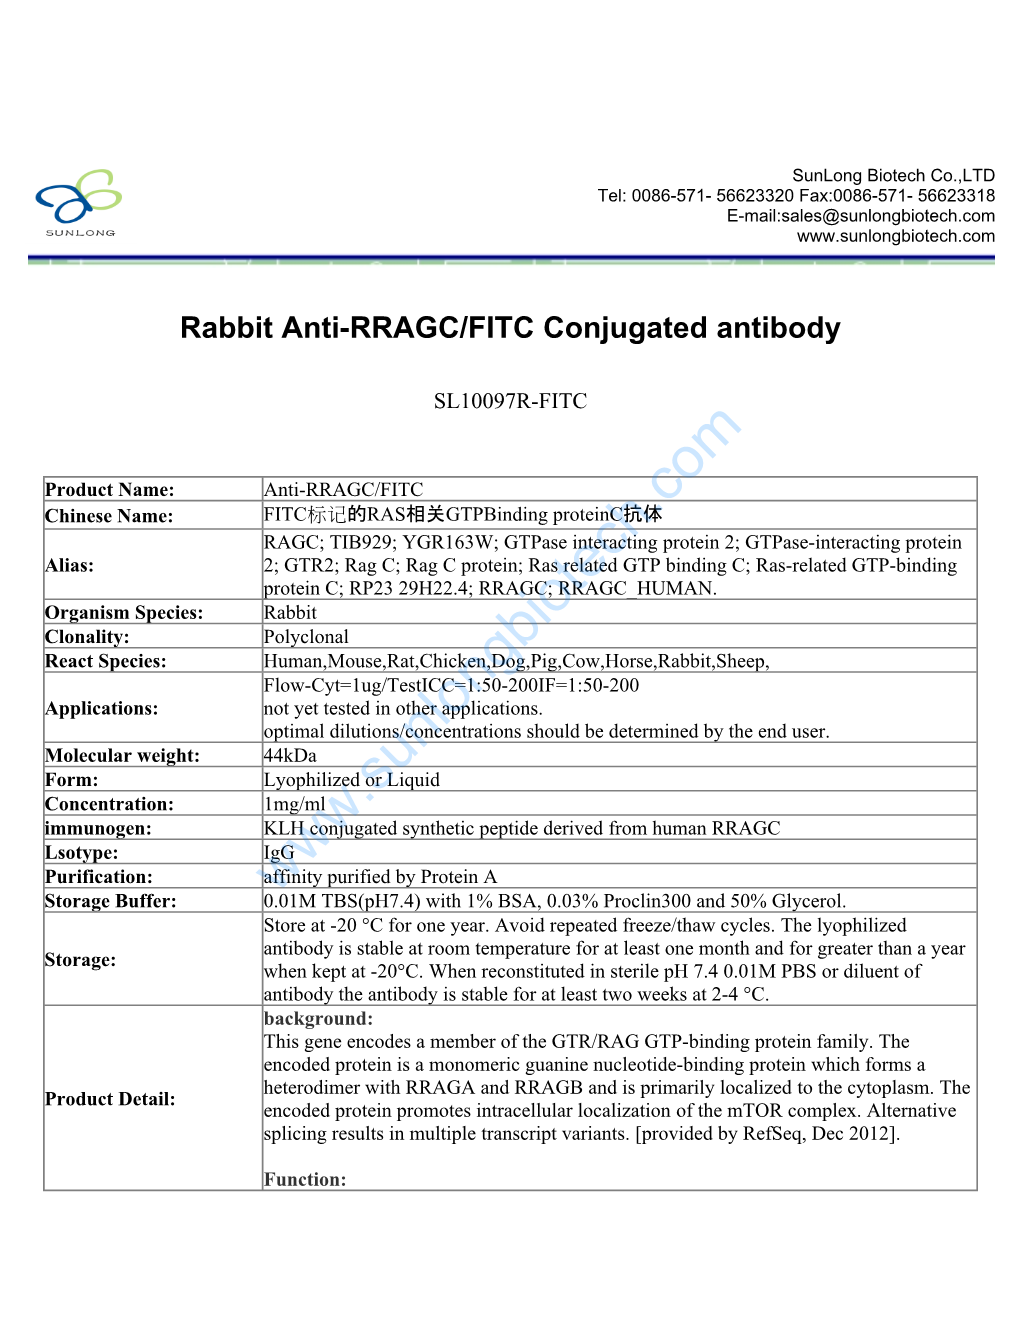 Rabbit Anti-RRAGC/FITC Conjugated Antibody-SL10097R-FITC